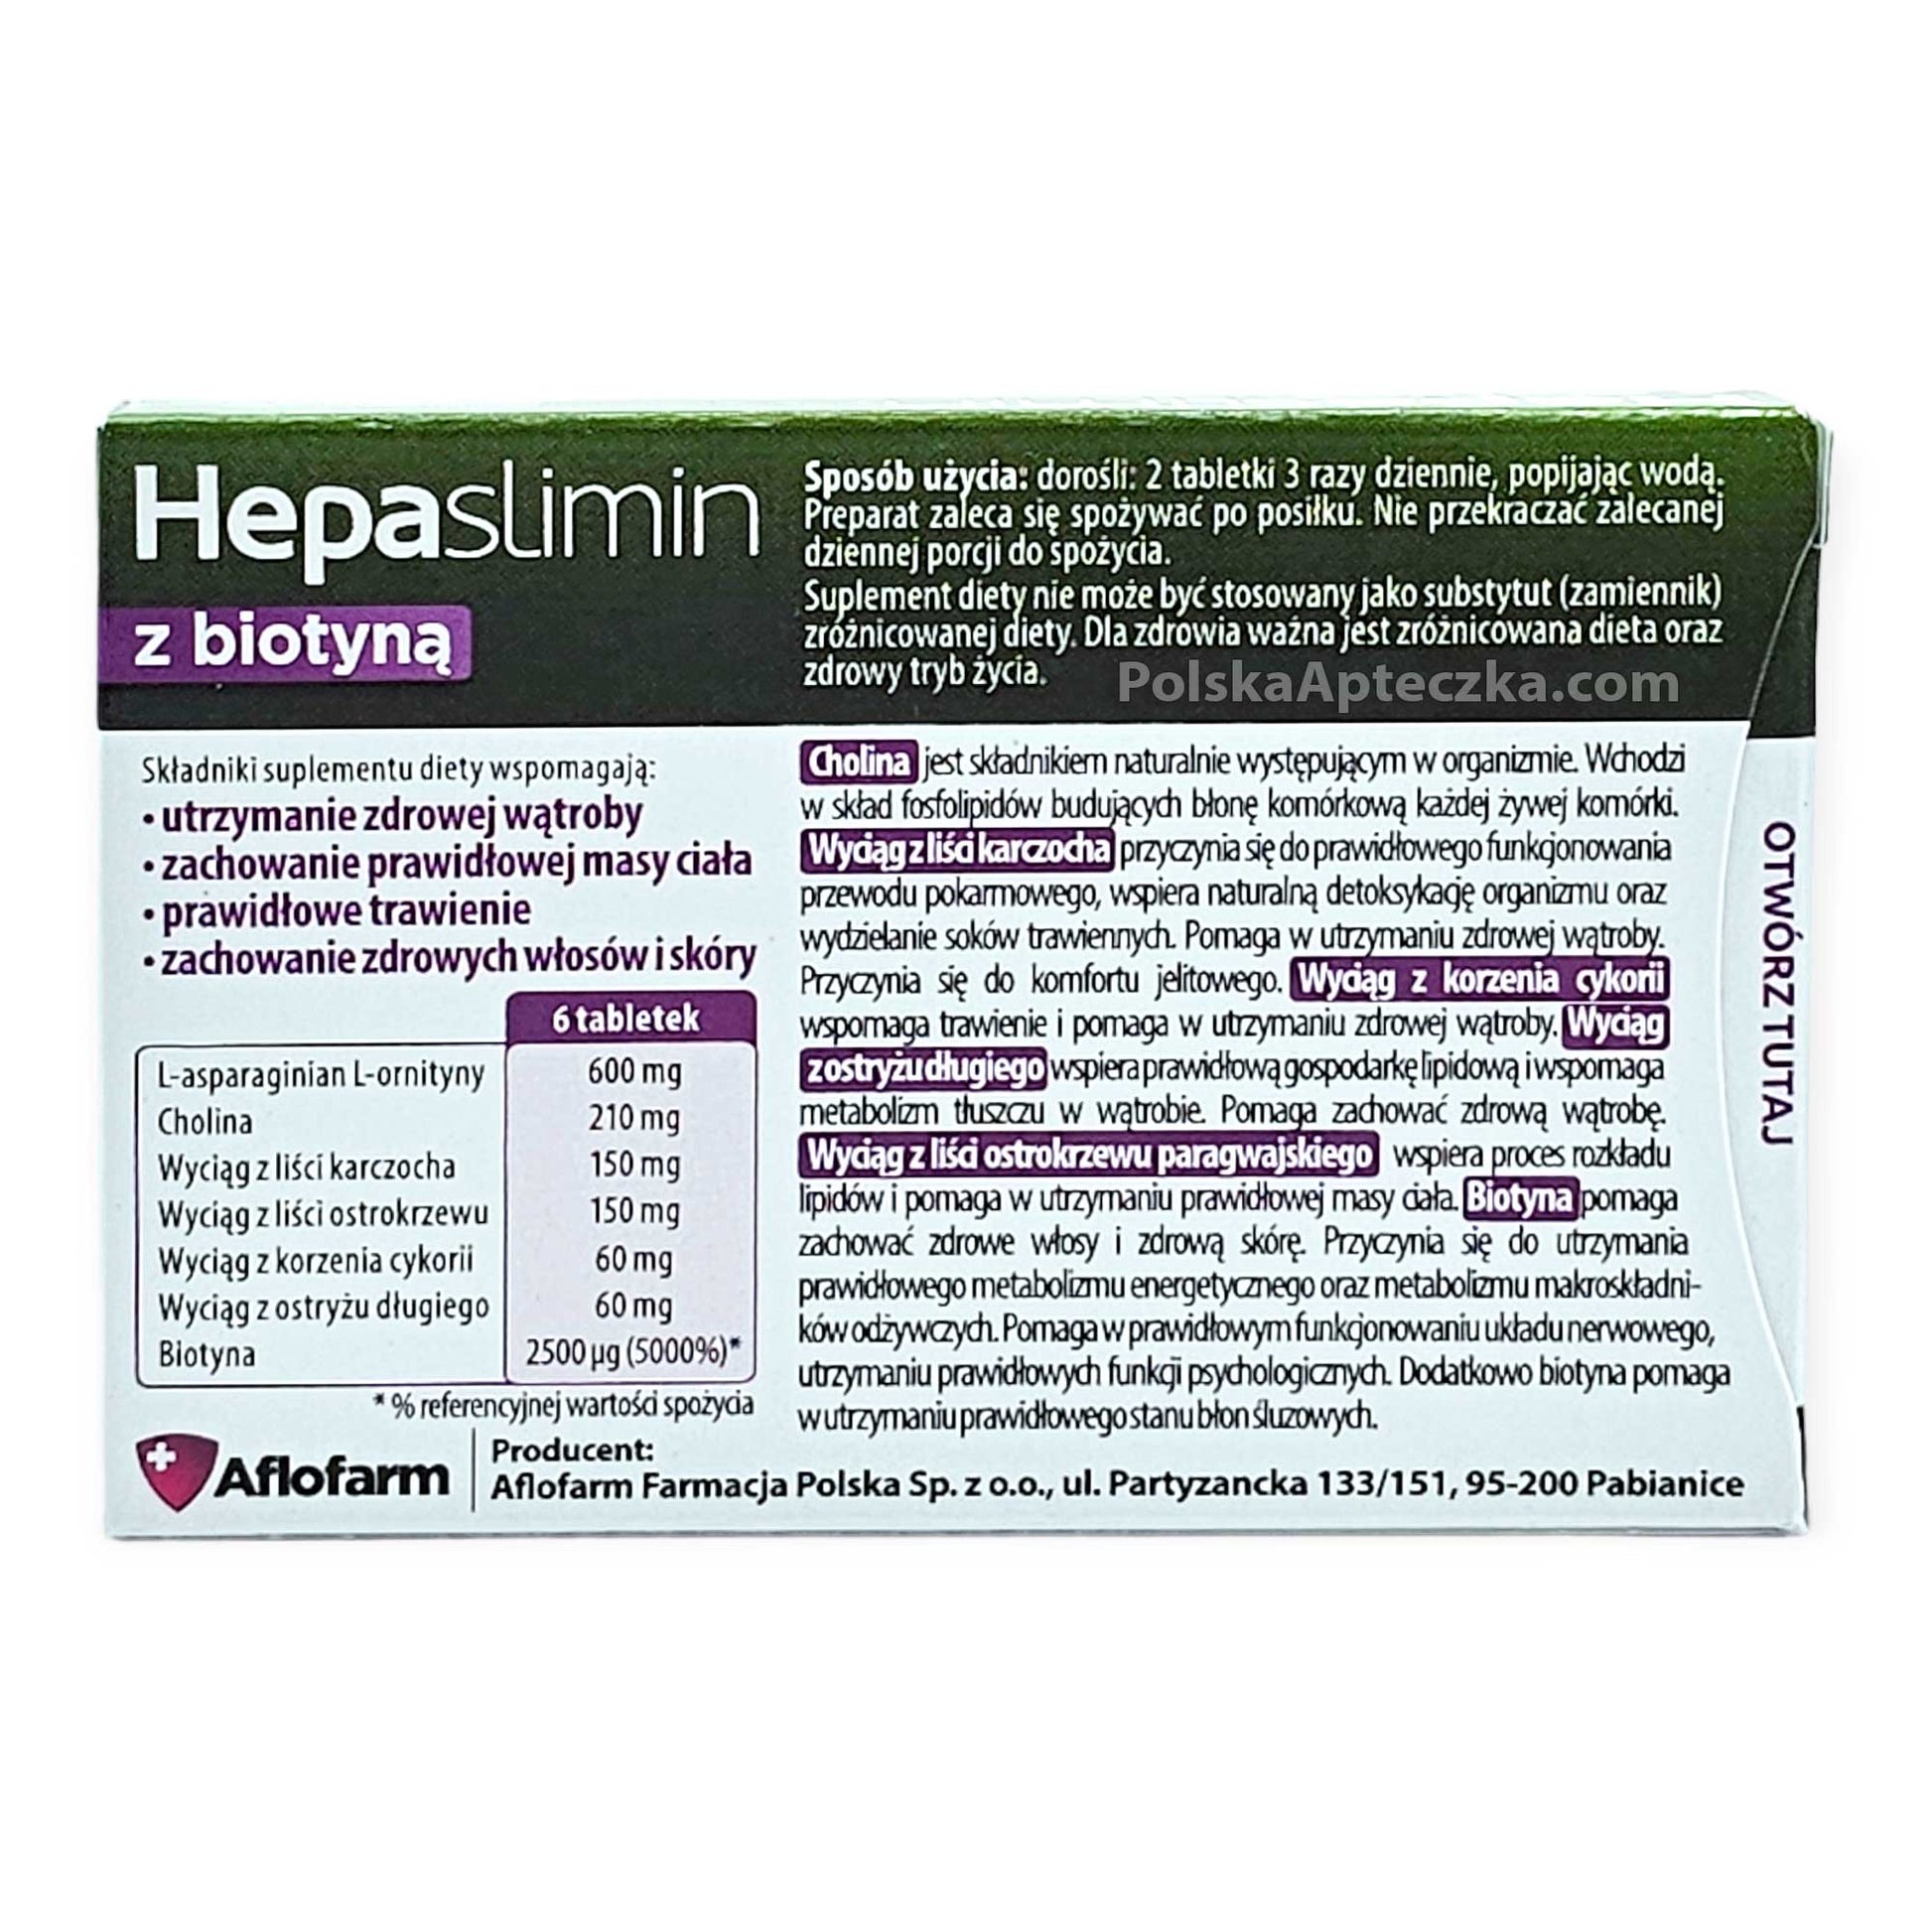 hepaslimin z biotyną